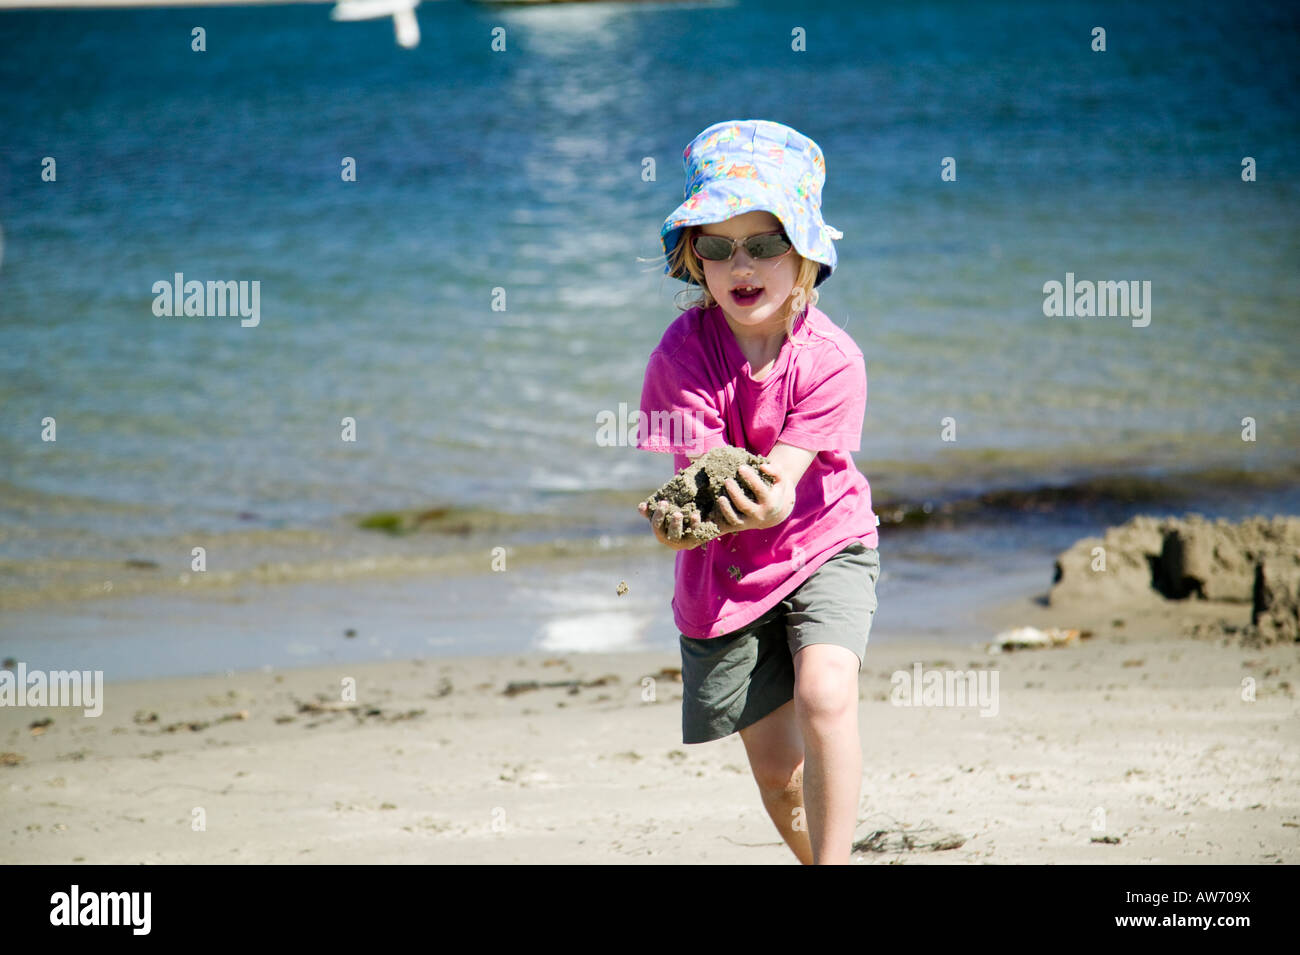 Girl playing on a beach Santa Barbara, California, USA Stock Photo